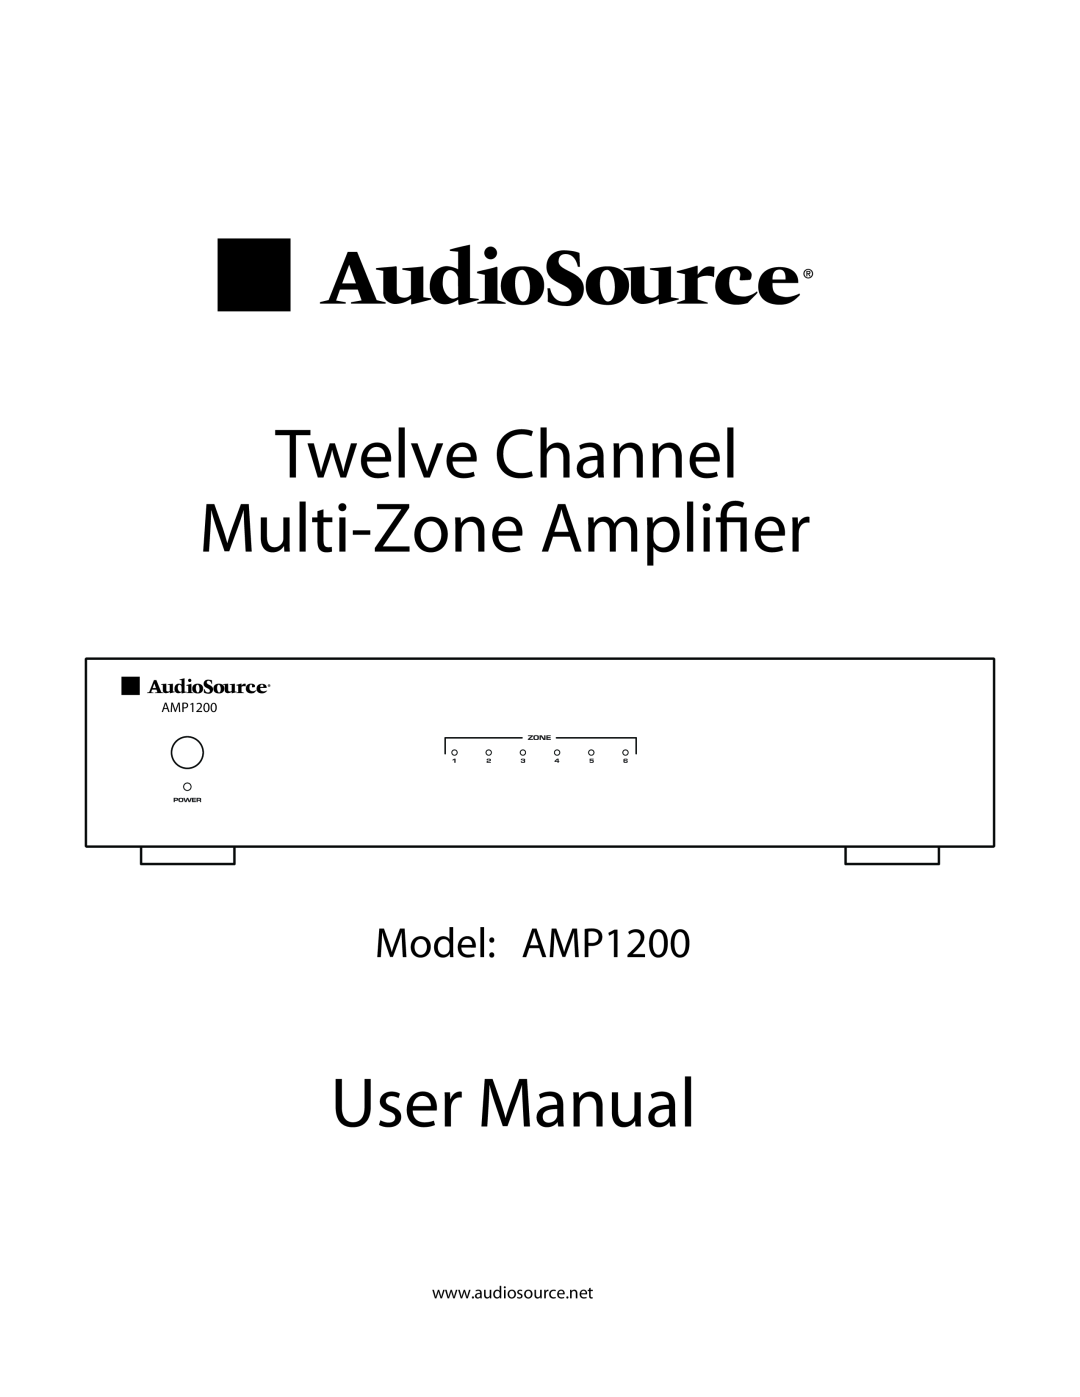 AudioSource AudioSource Twelve Channel Multi-Zone Amplifier user manual Twelve Channel Multi-ZoneAmpliﬁer, Model AMP1200 